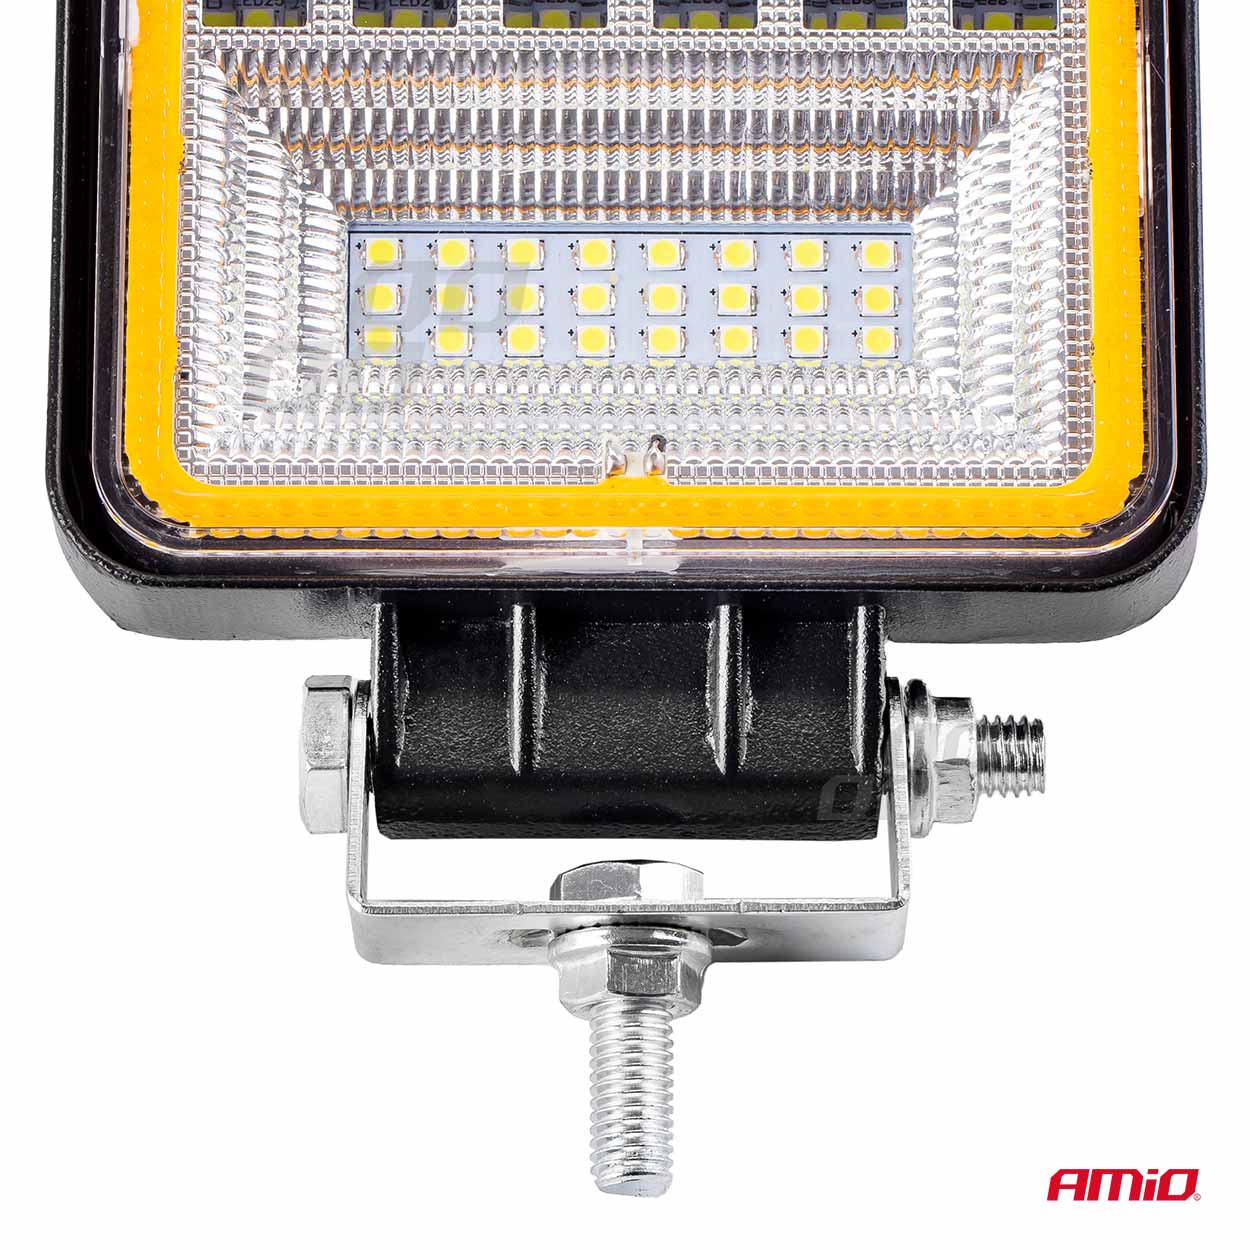 Proiector cu LED din metal patrat Combo Angel Eyes cu 2 functii, 9/36V, Amio Garage AutoRide